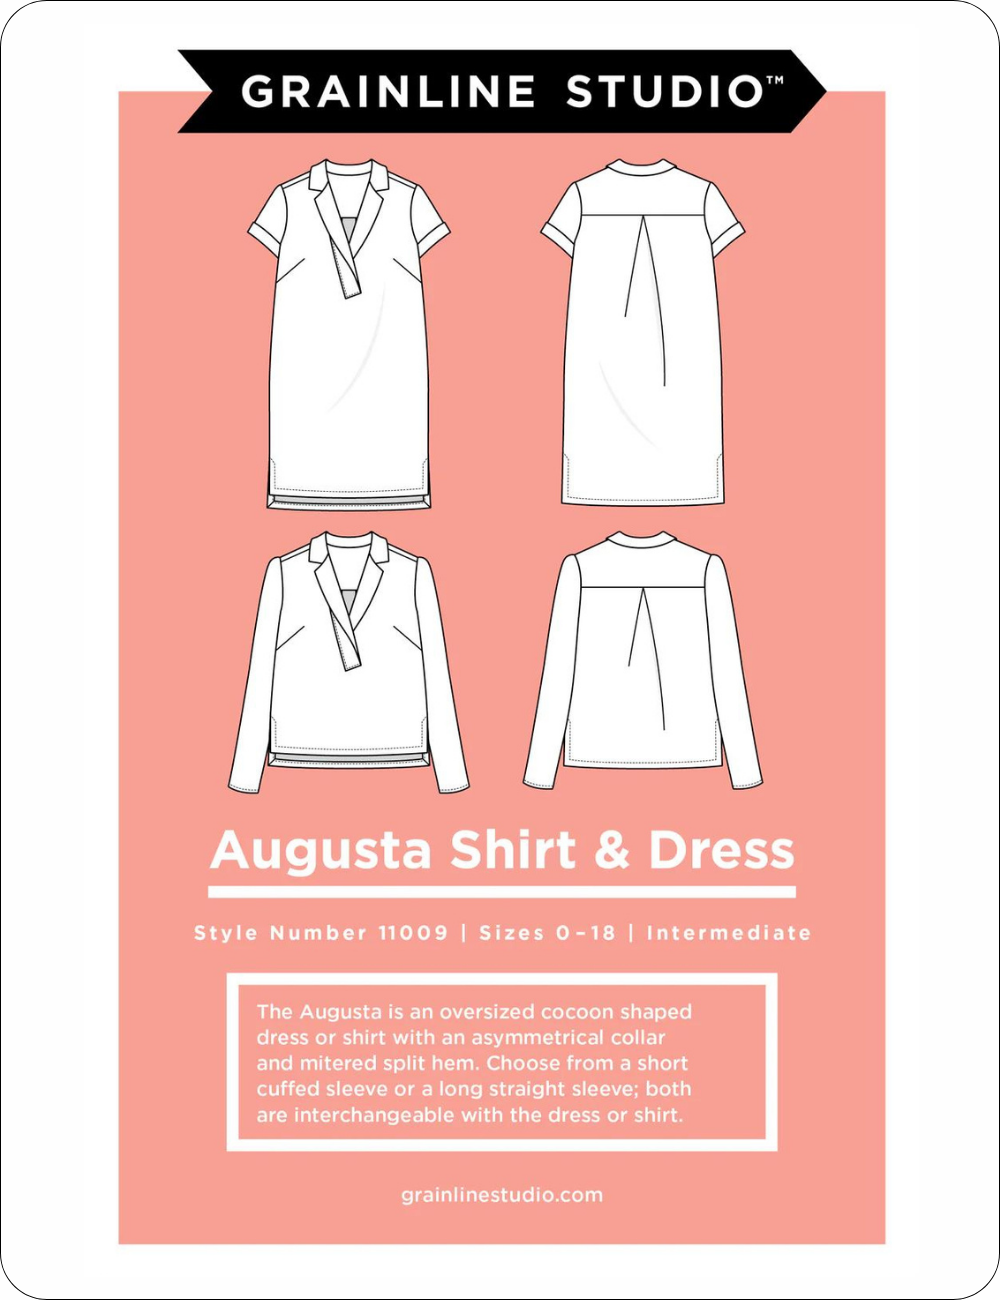 Grainline Studio - Augusta Shirt and dress - 0-18